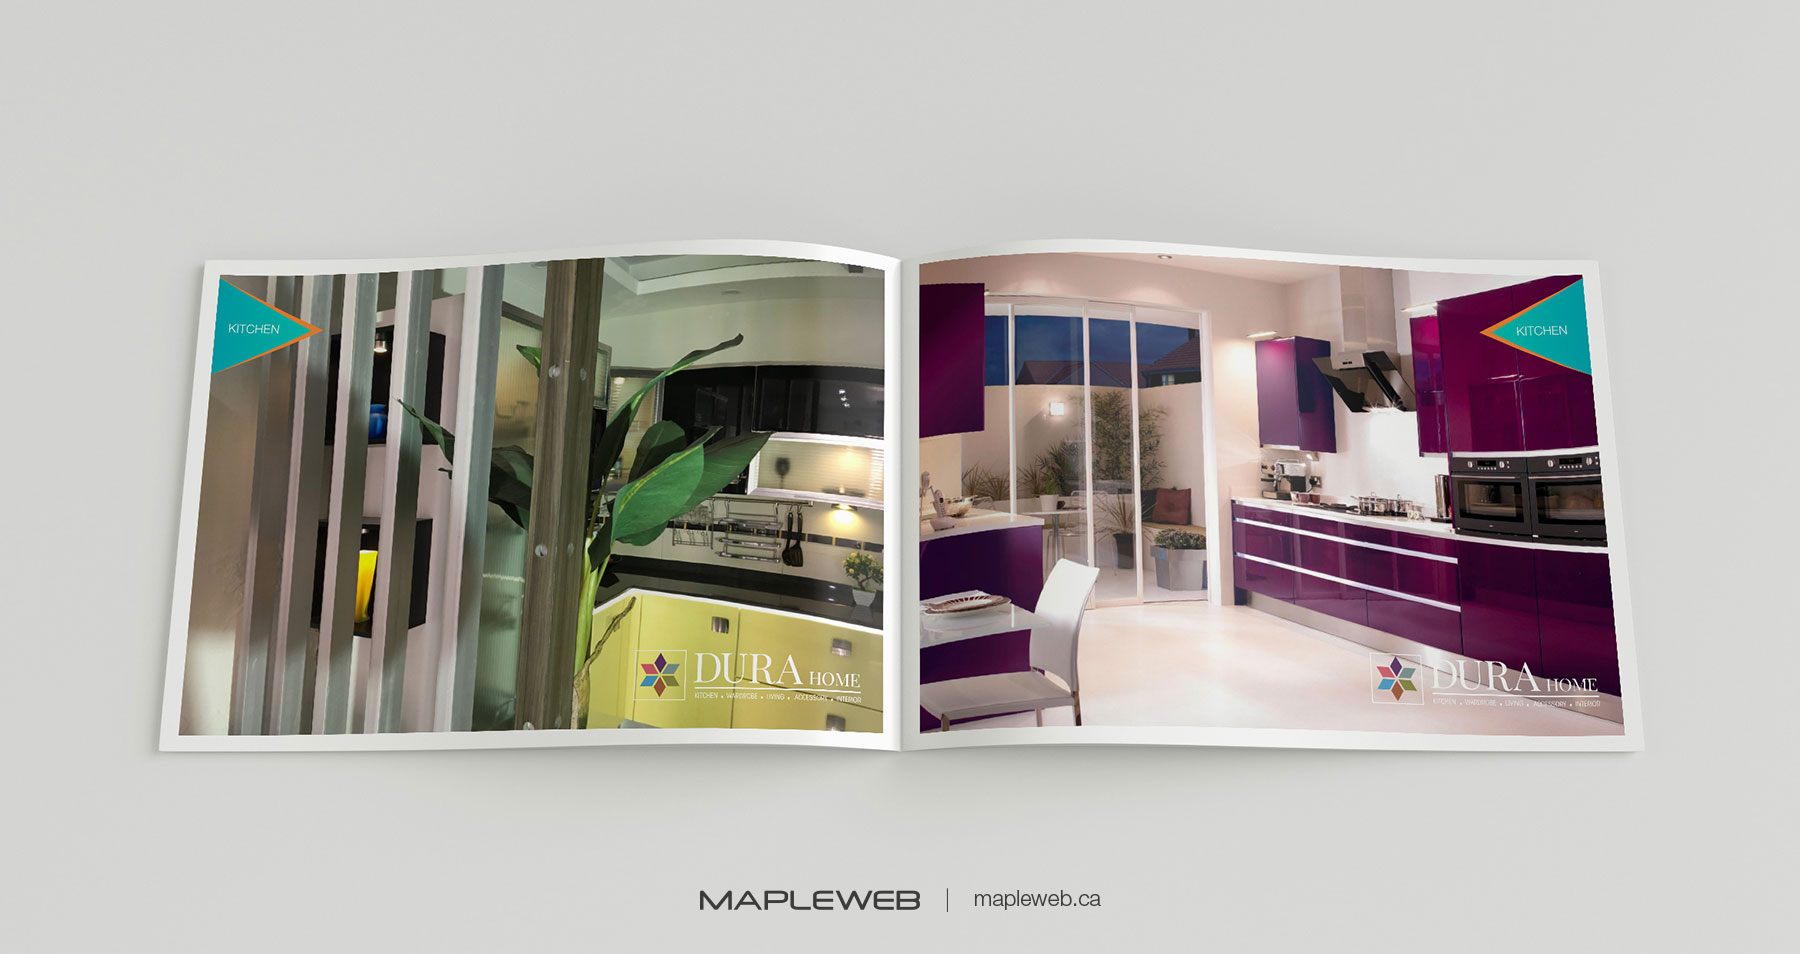 Dura Home Brand design by Mapleweb Open Photo Album Displaying Kitchen Designs